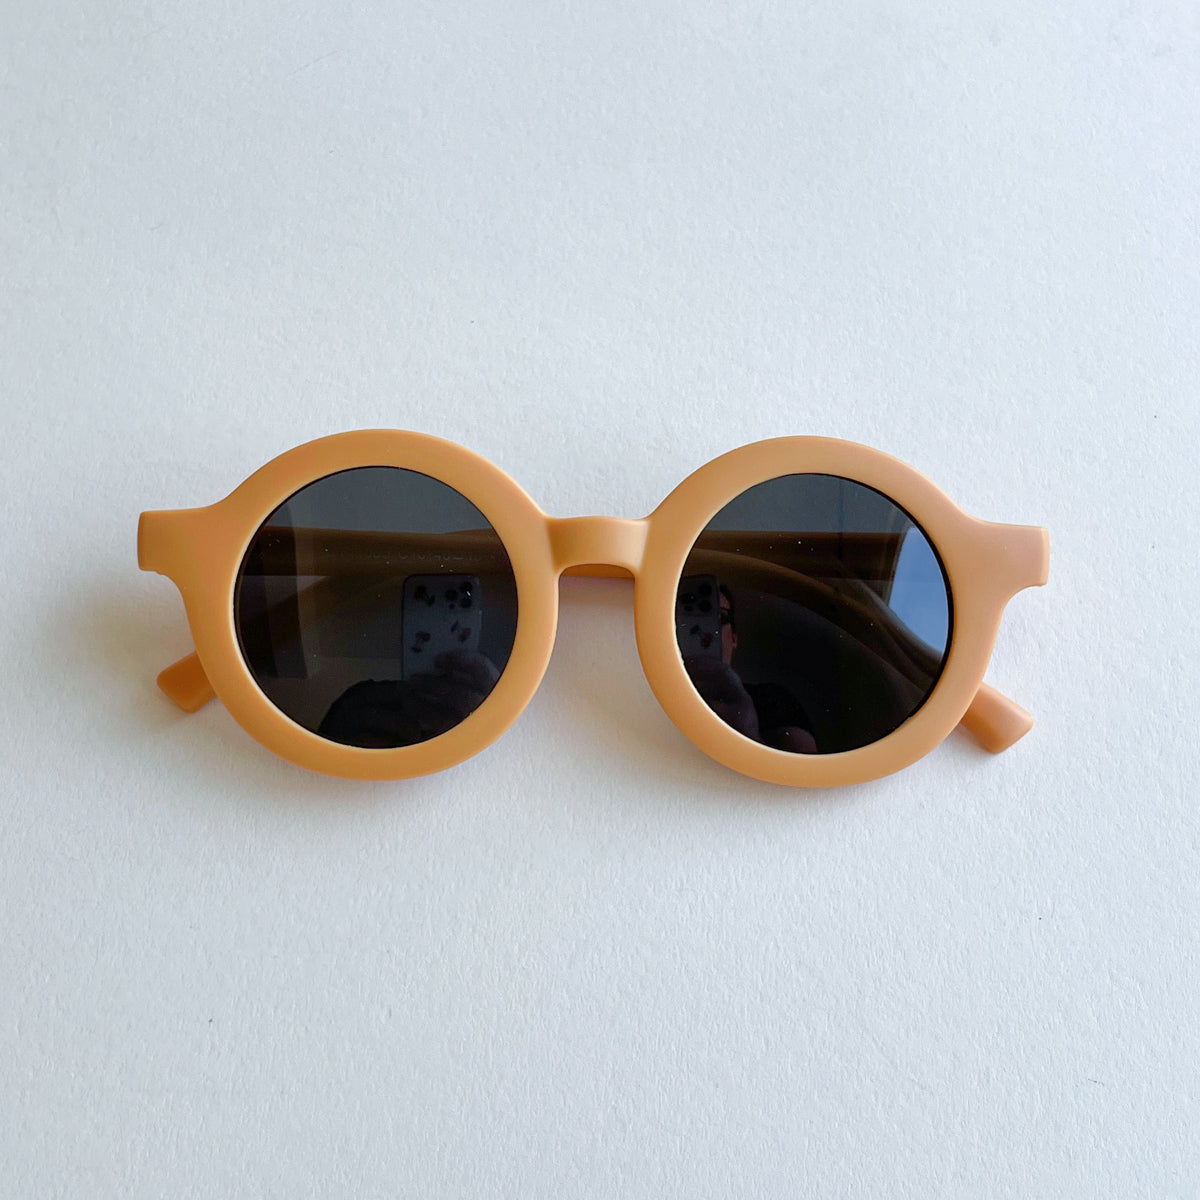 New Flexible, Resistant & Polarized UV 400 Kids Sunglasses Mustard